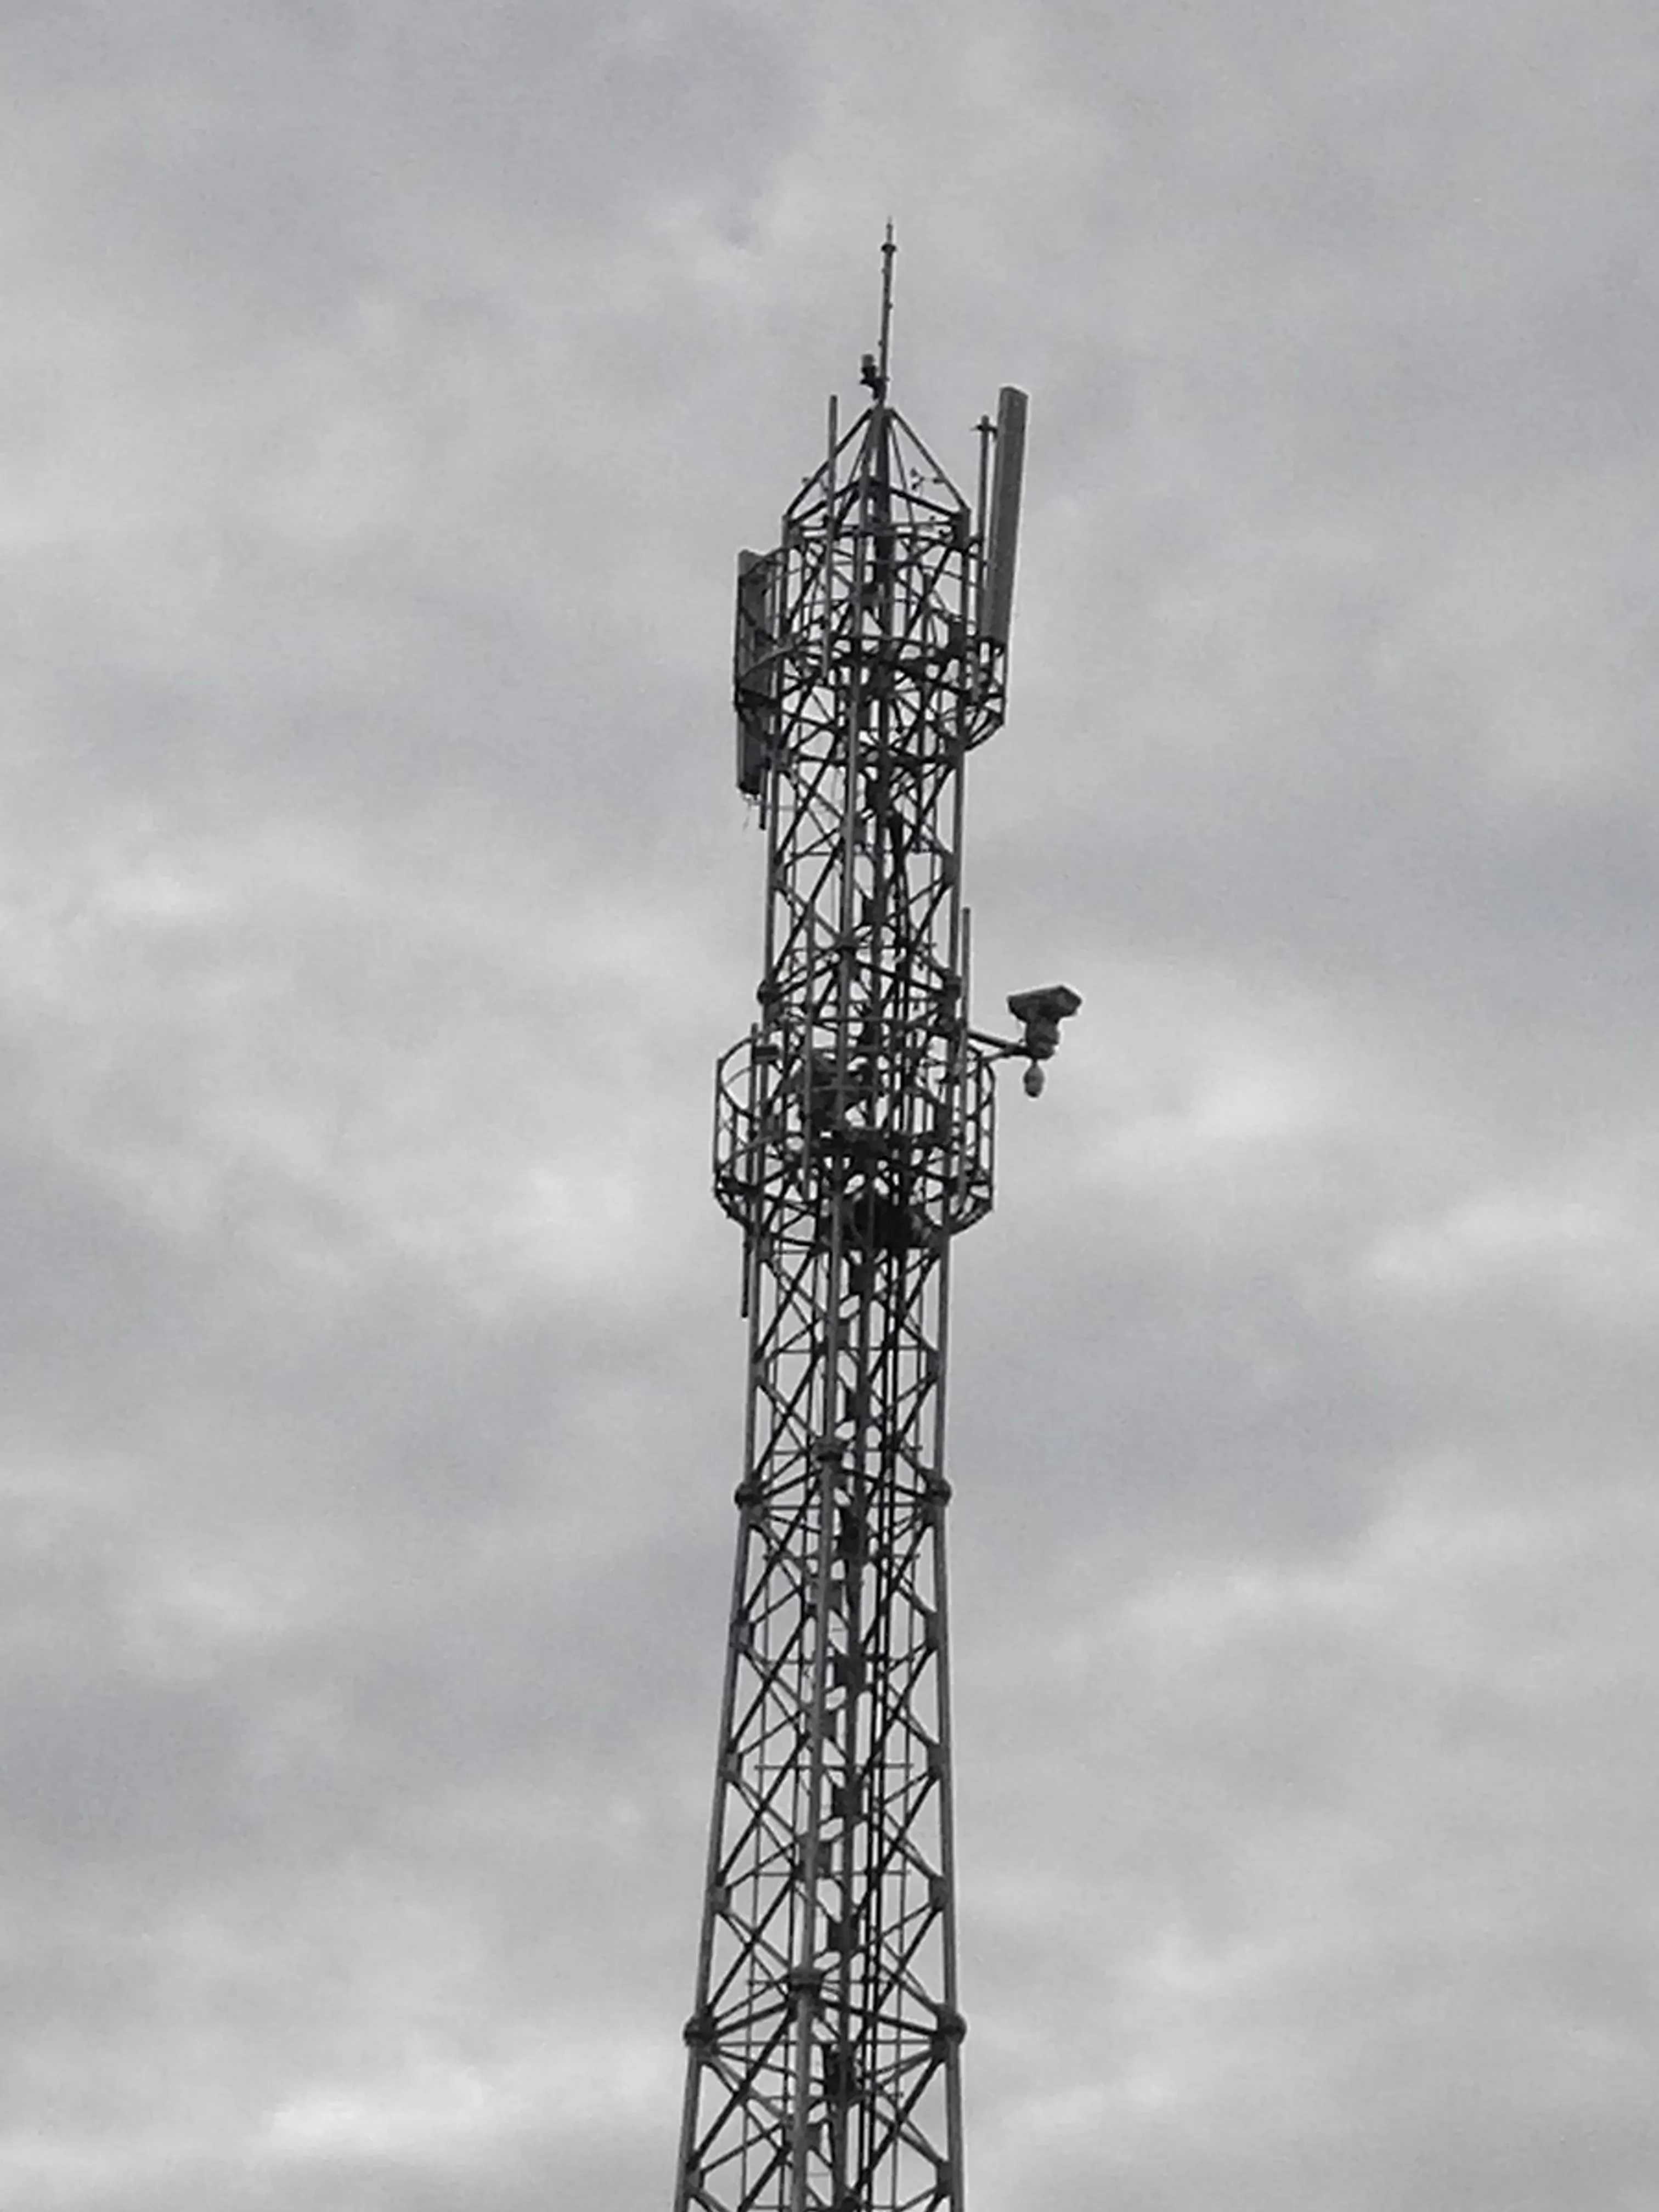 Torre de acero de telecomunicaciones